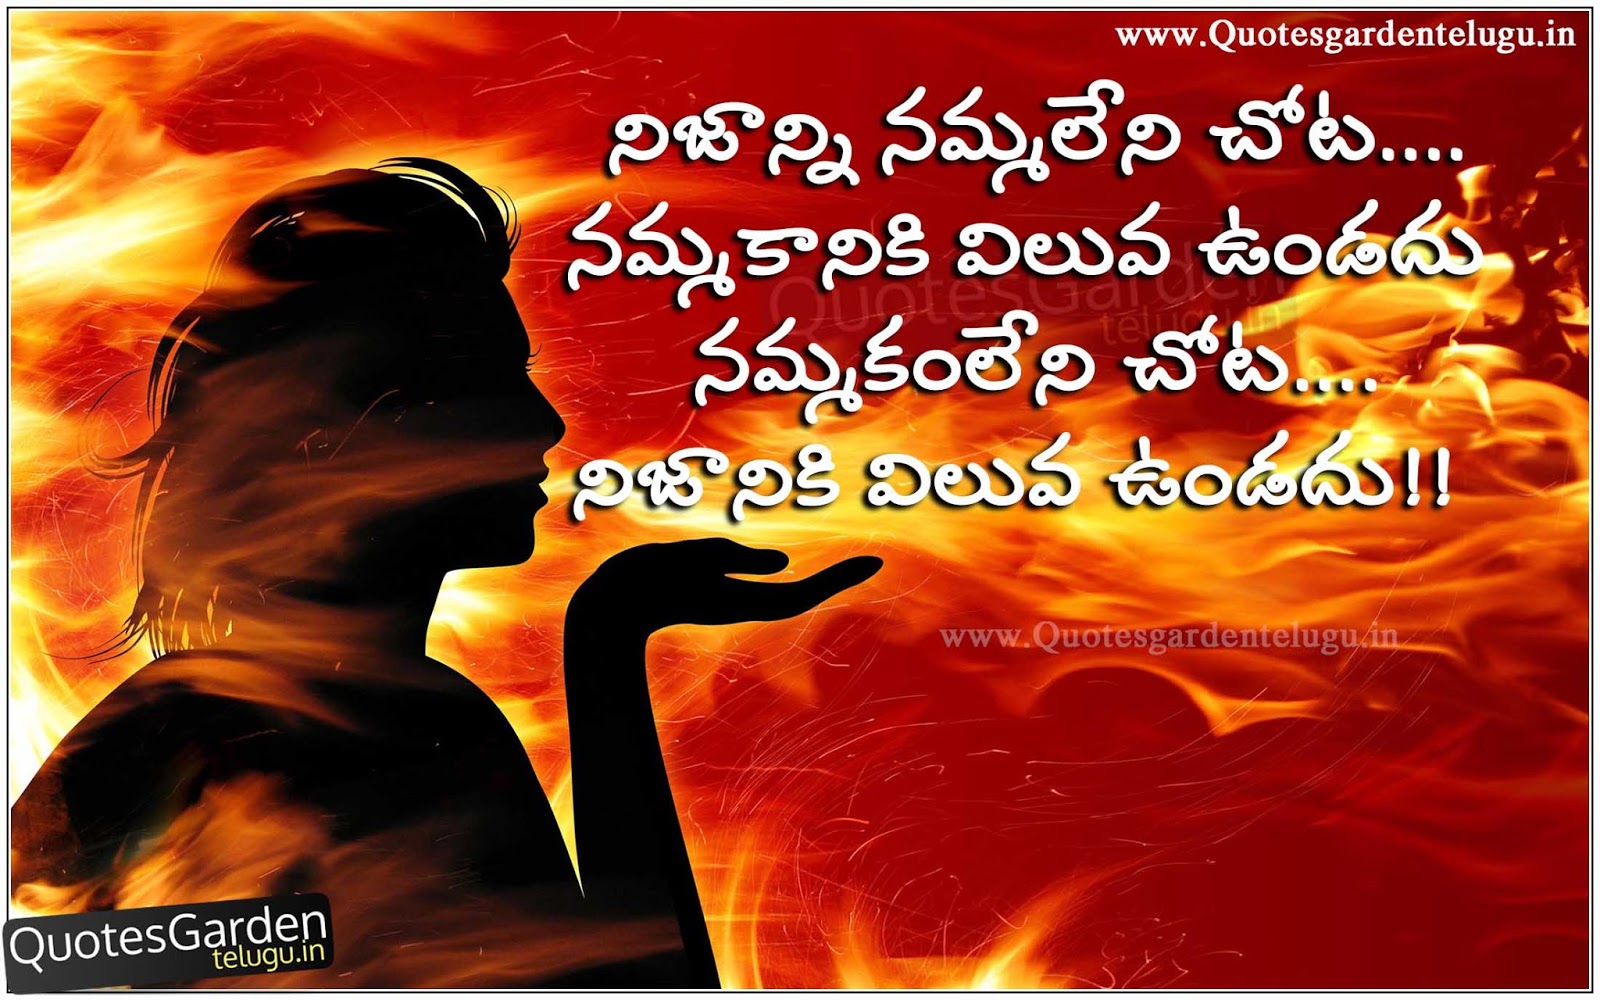 Real Life Inspirational Telugu Quotations | QUOTES GARDEN TELUGU ...